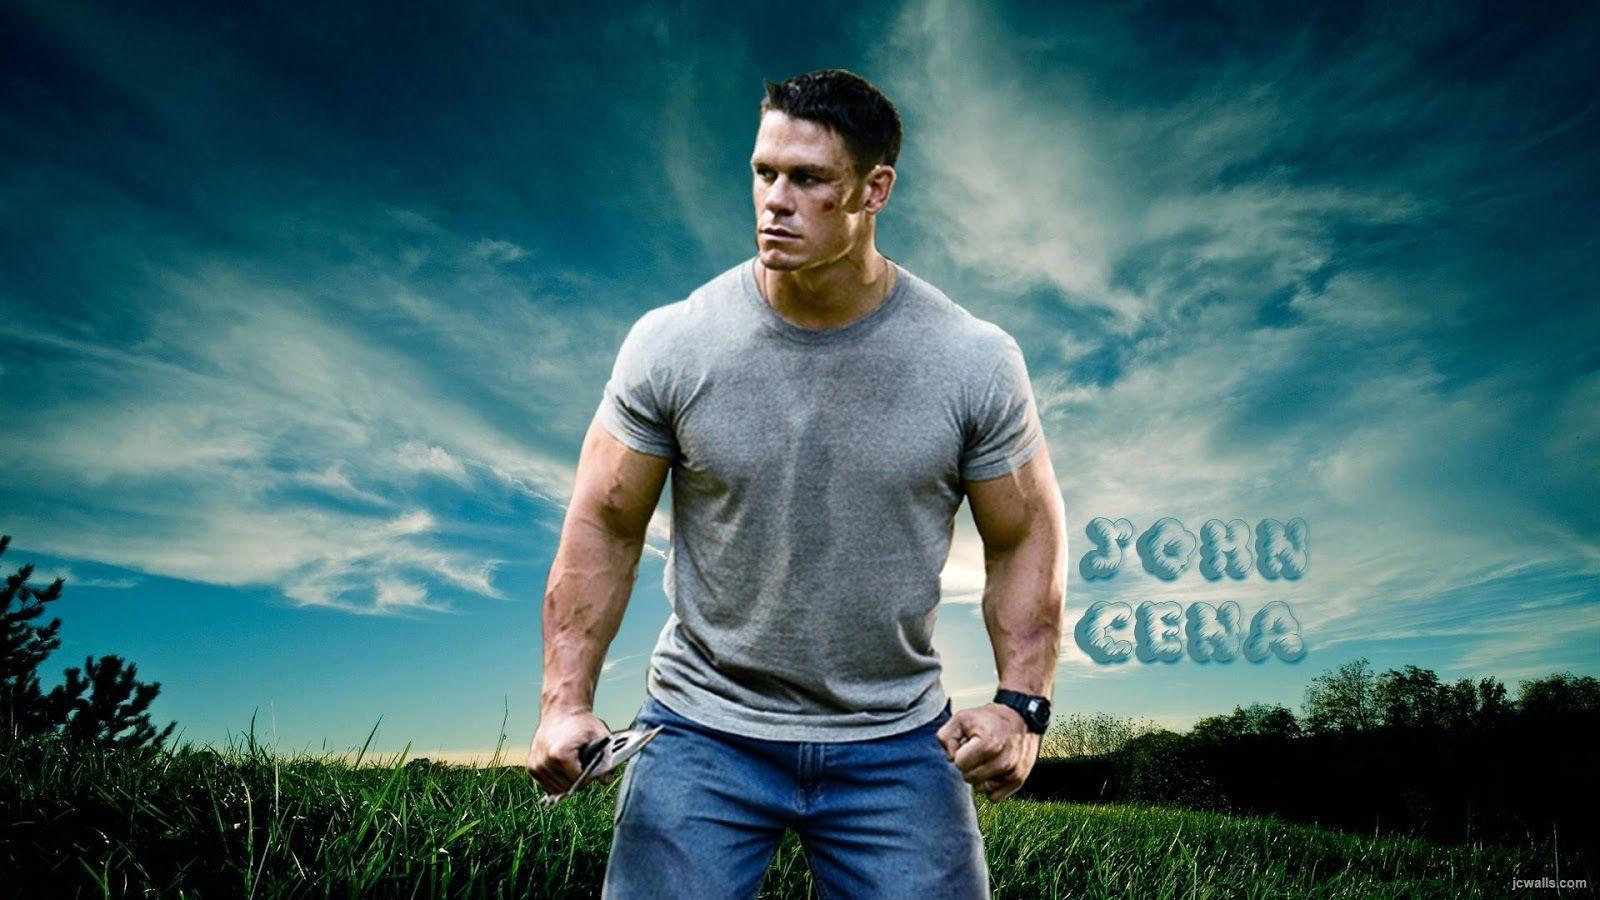 John Cena 2016 HD Wallpaper Download For PC Cover photo